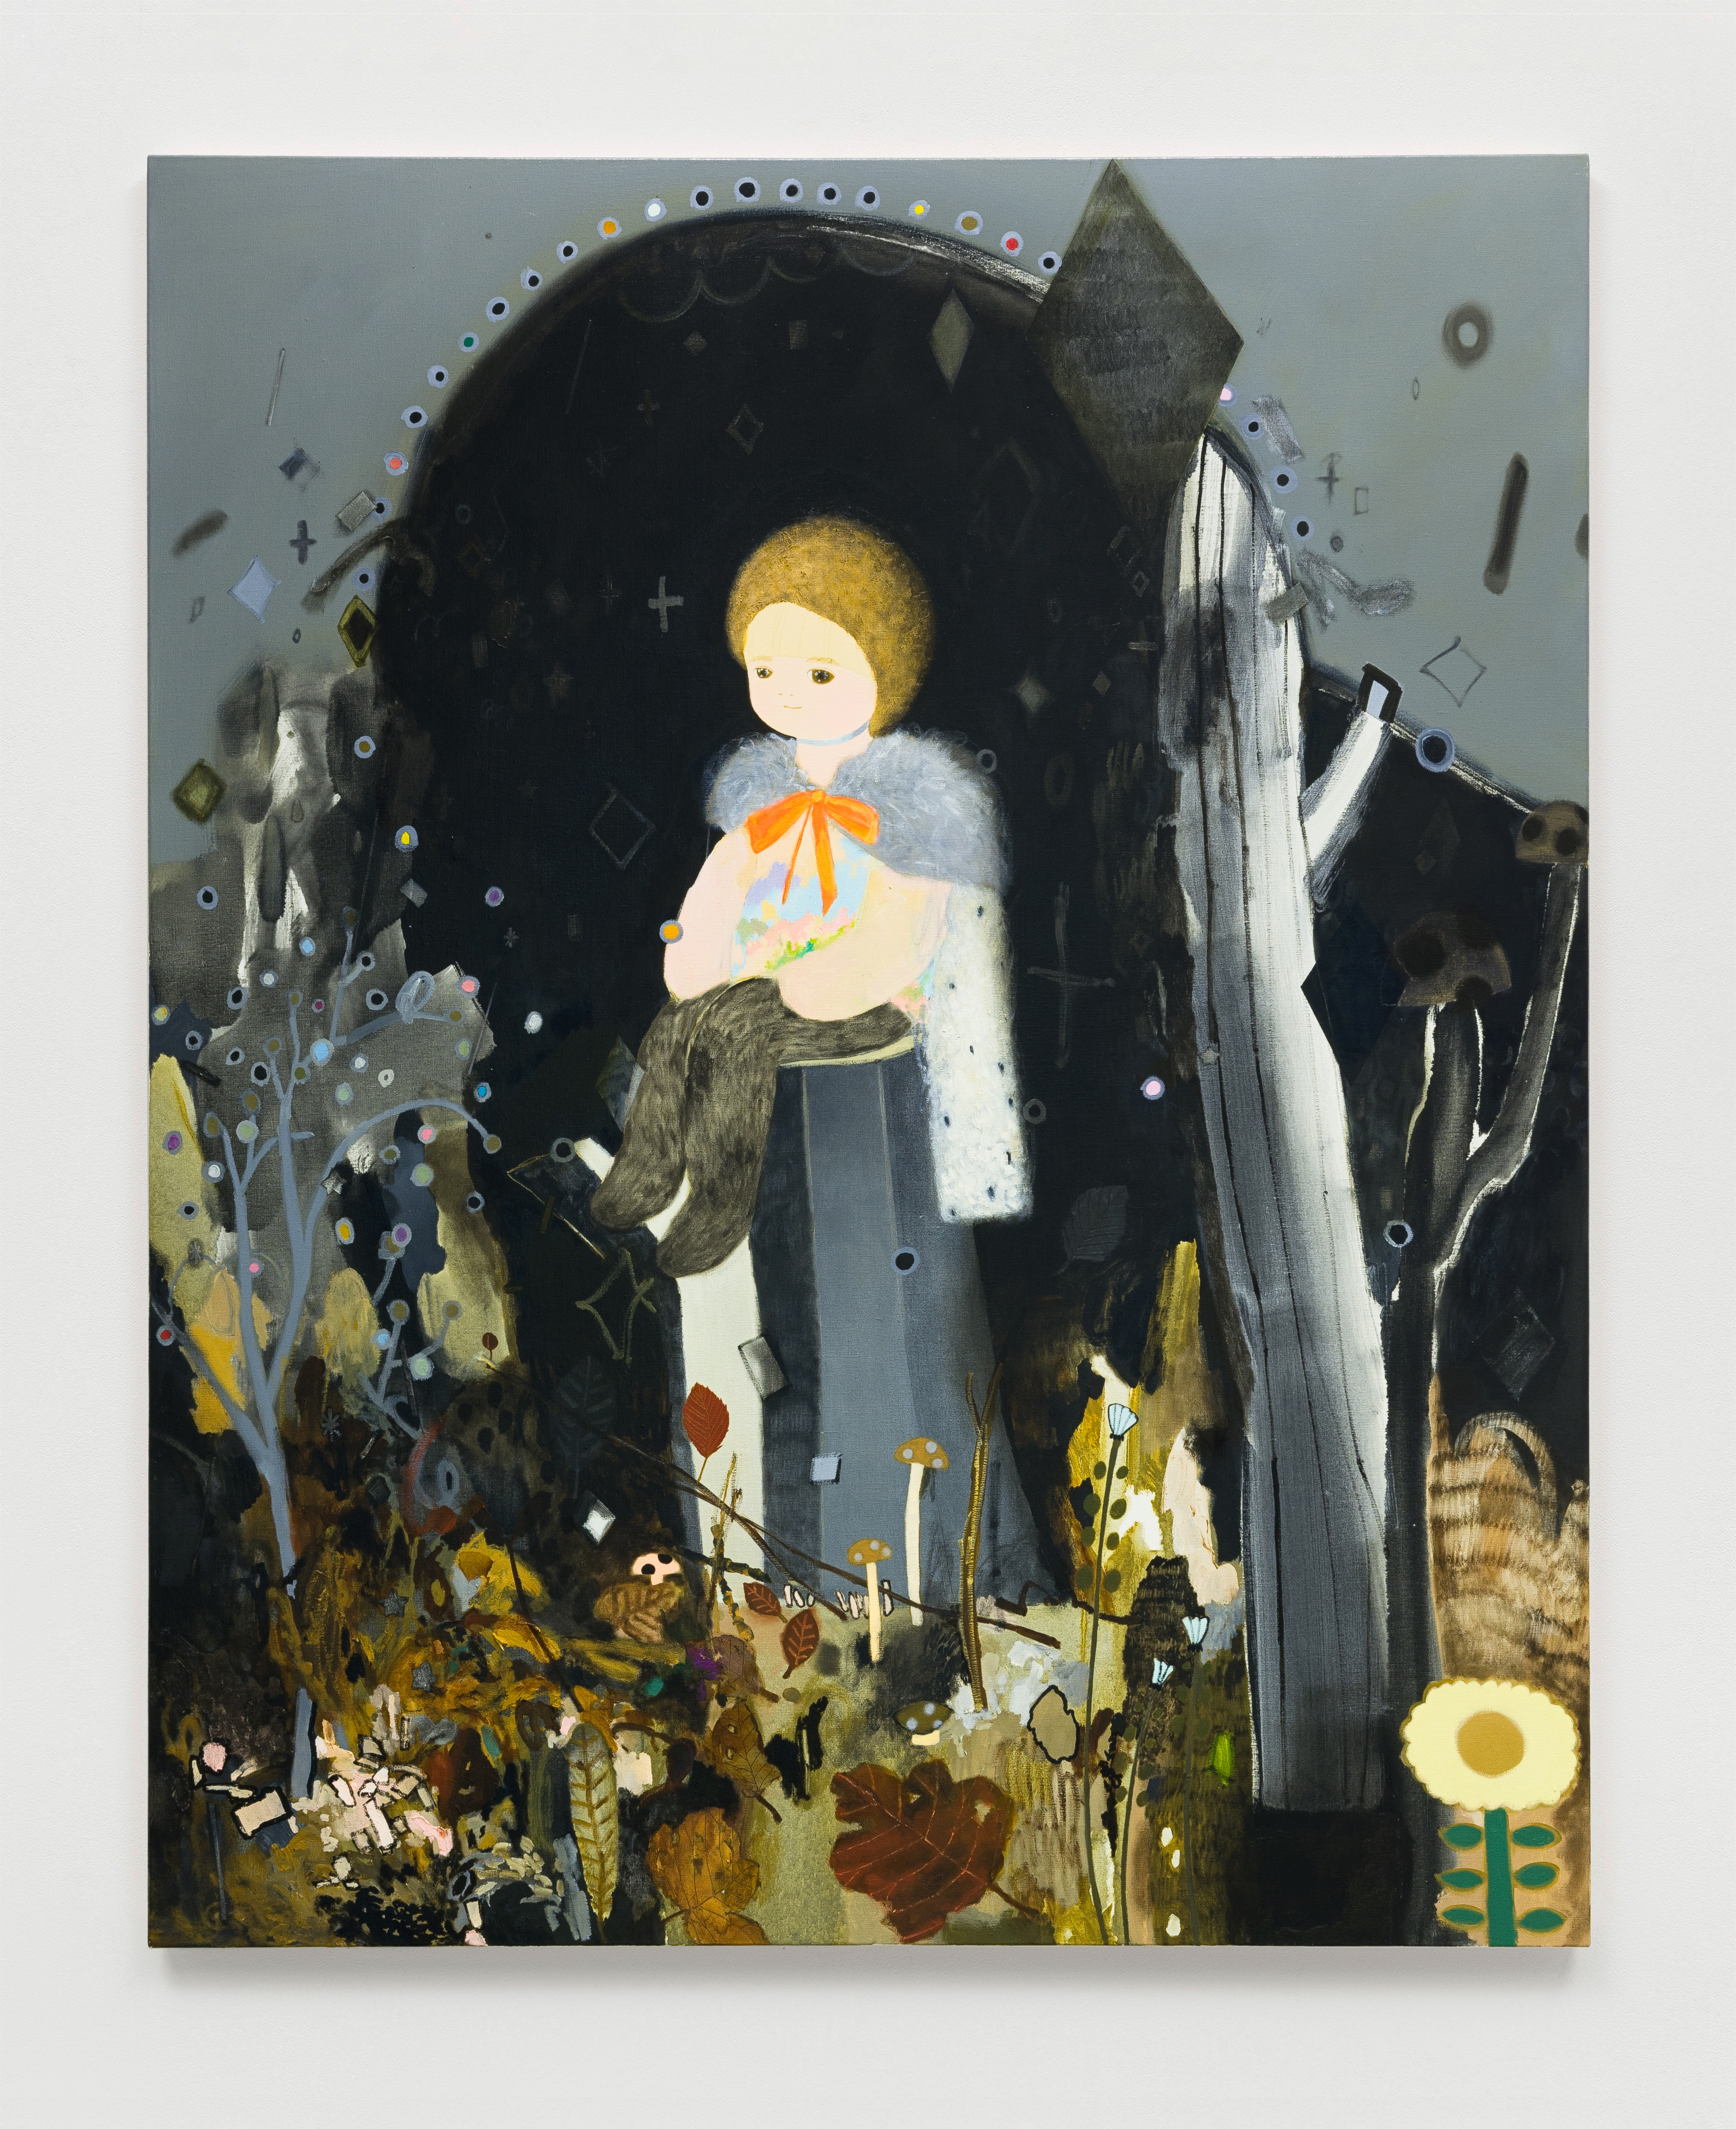 Tomoko Nagai, Short Break, 2022, oil on canvas, 162 x 130.3 cm, 63 3/4 x 51 1/4 in